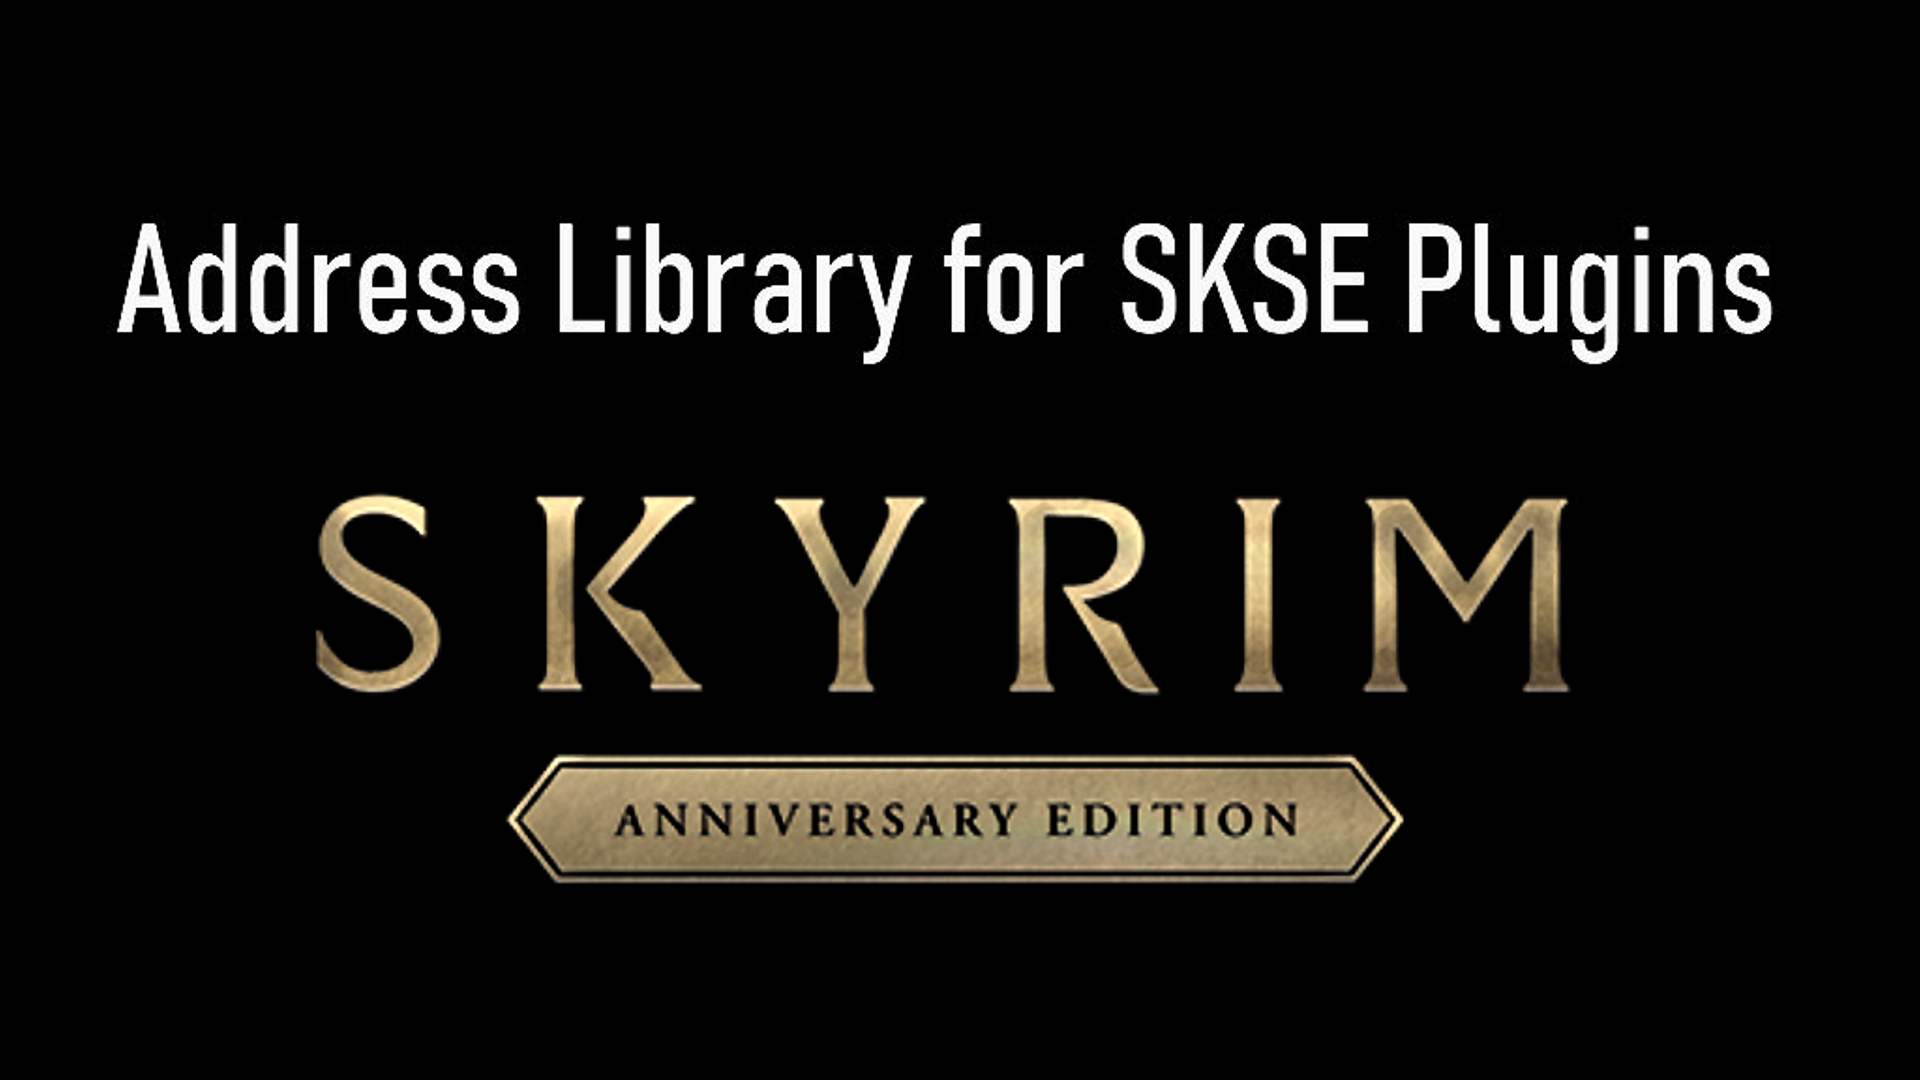 Skse library. Address Library. SKSE. Address Library for SKSE Plugins Skyrim se. Skyrim SKSE failed to open adress Library.